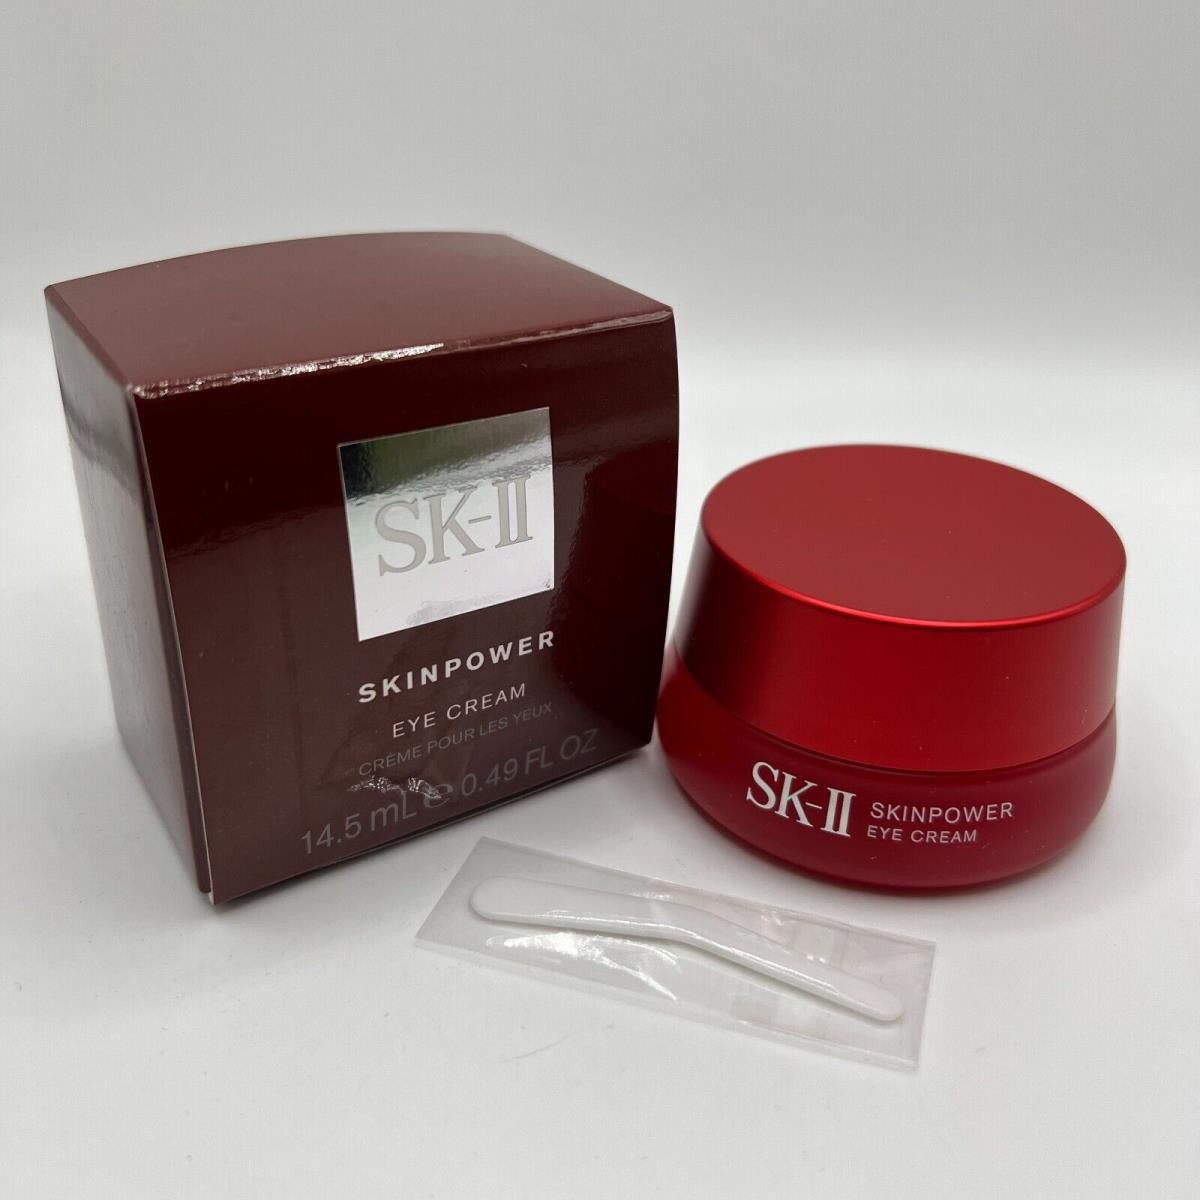 Sk-ii Skinpower Eye Cream 14.5g